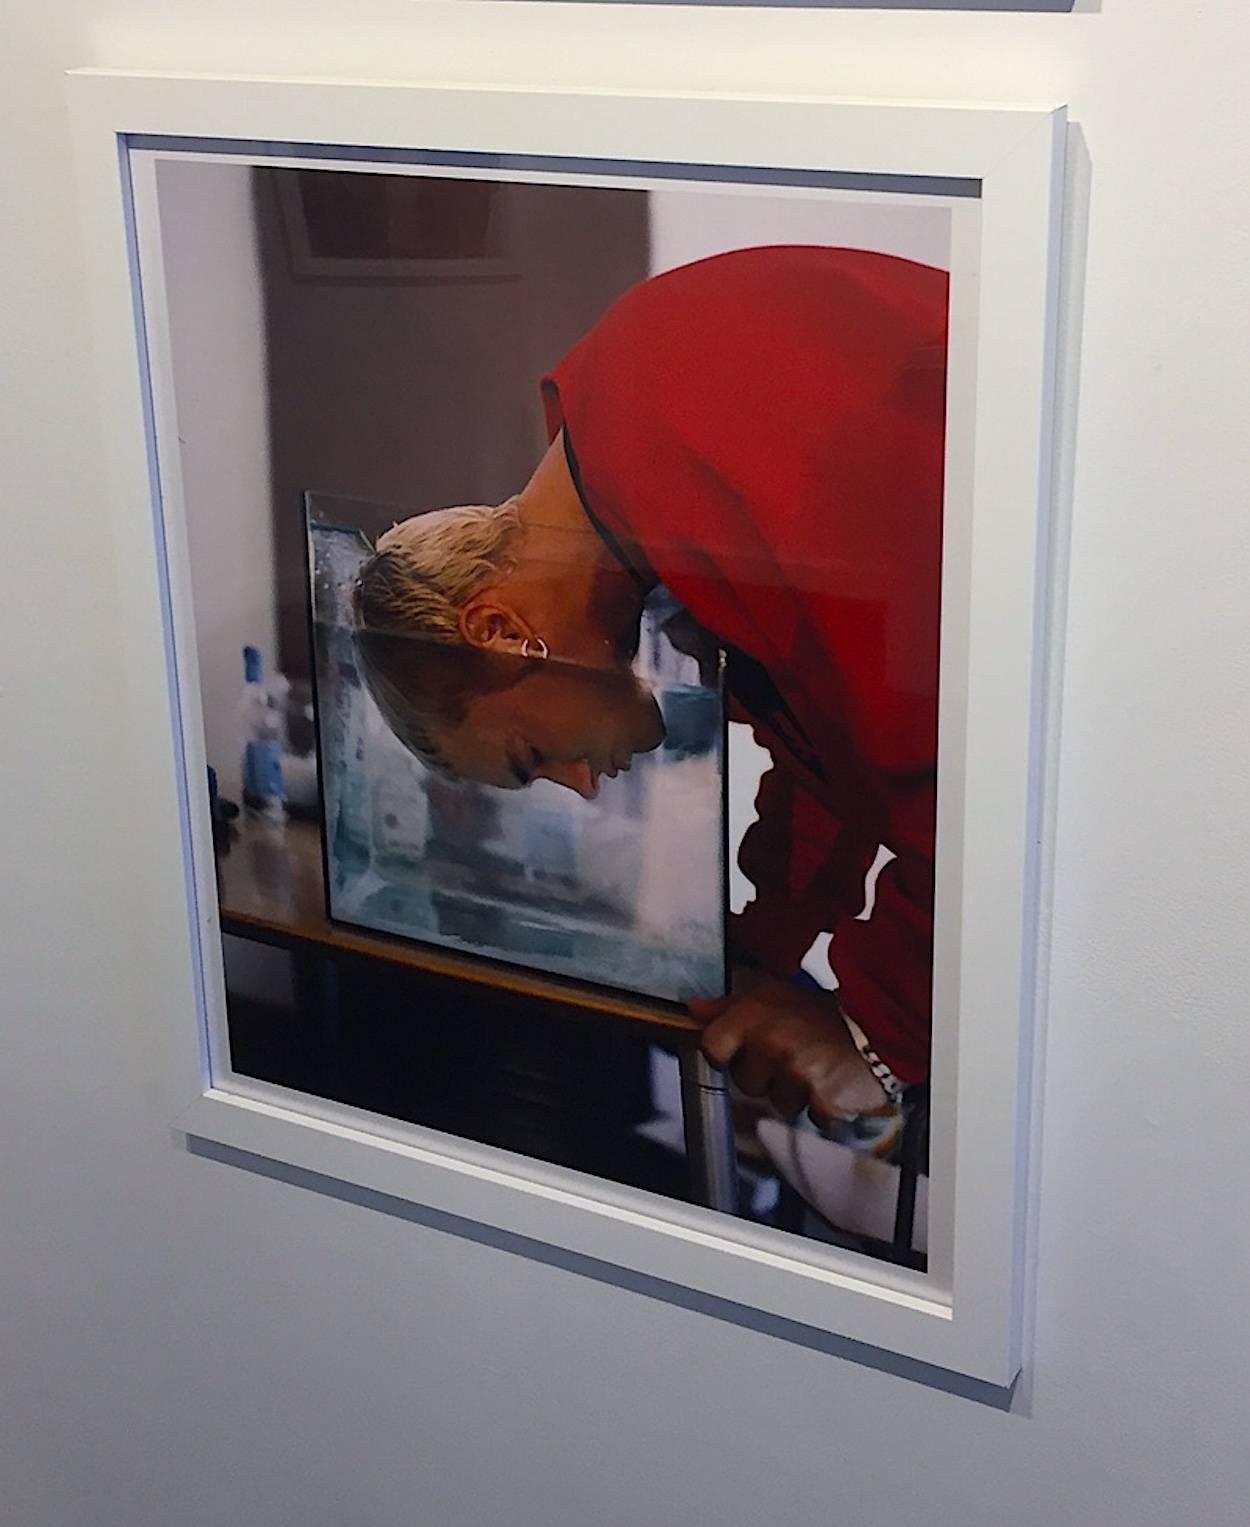 Eminem 1999 (unframed) photo figurative contemporary red portrait - Photograph by Chris Buck